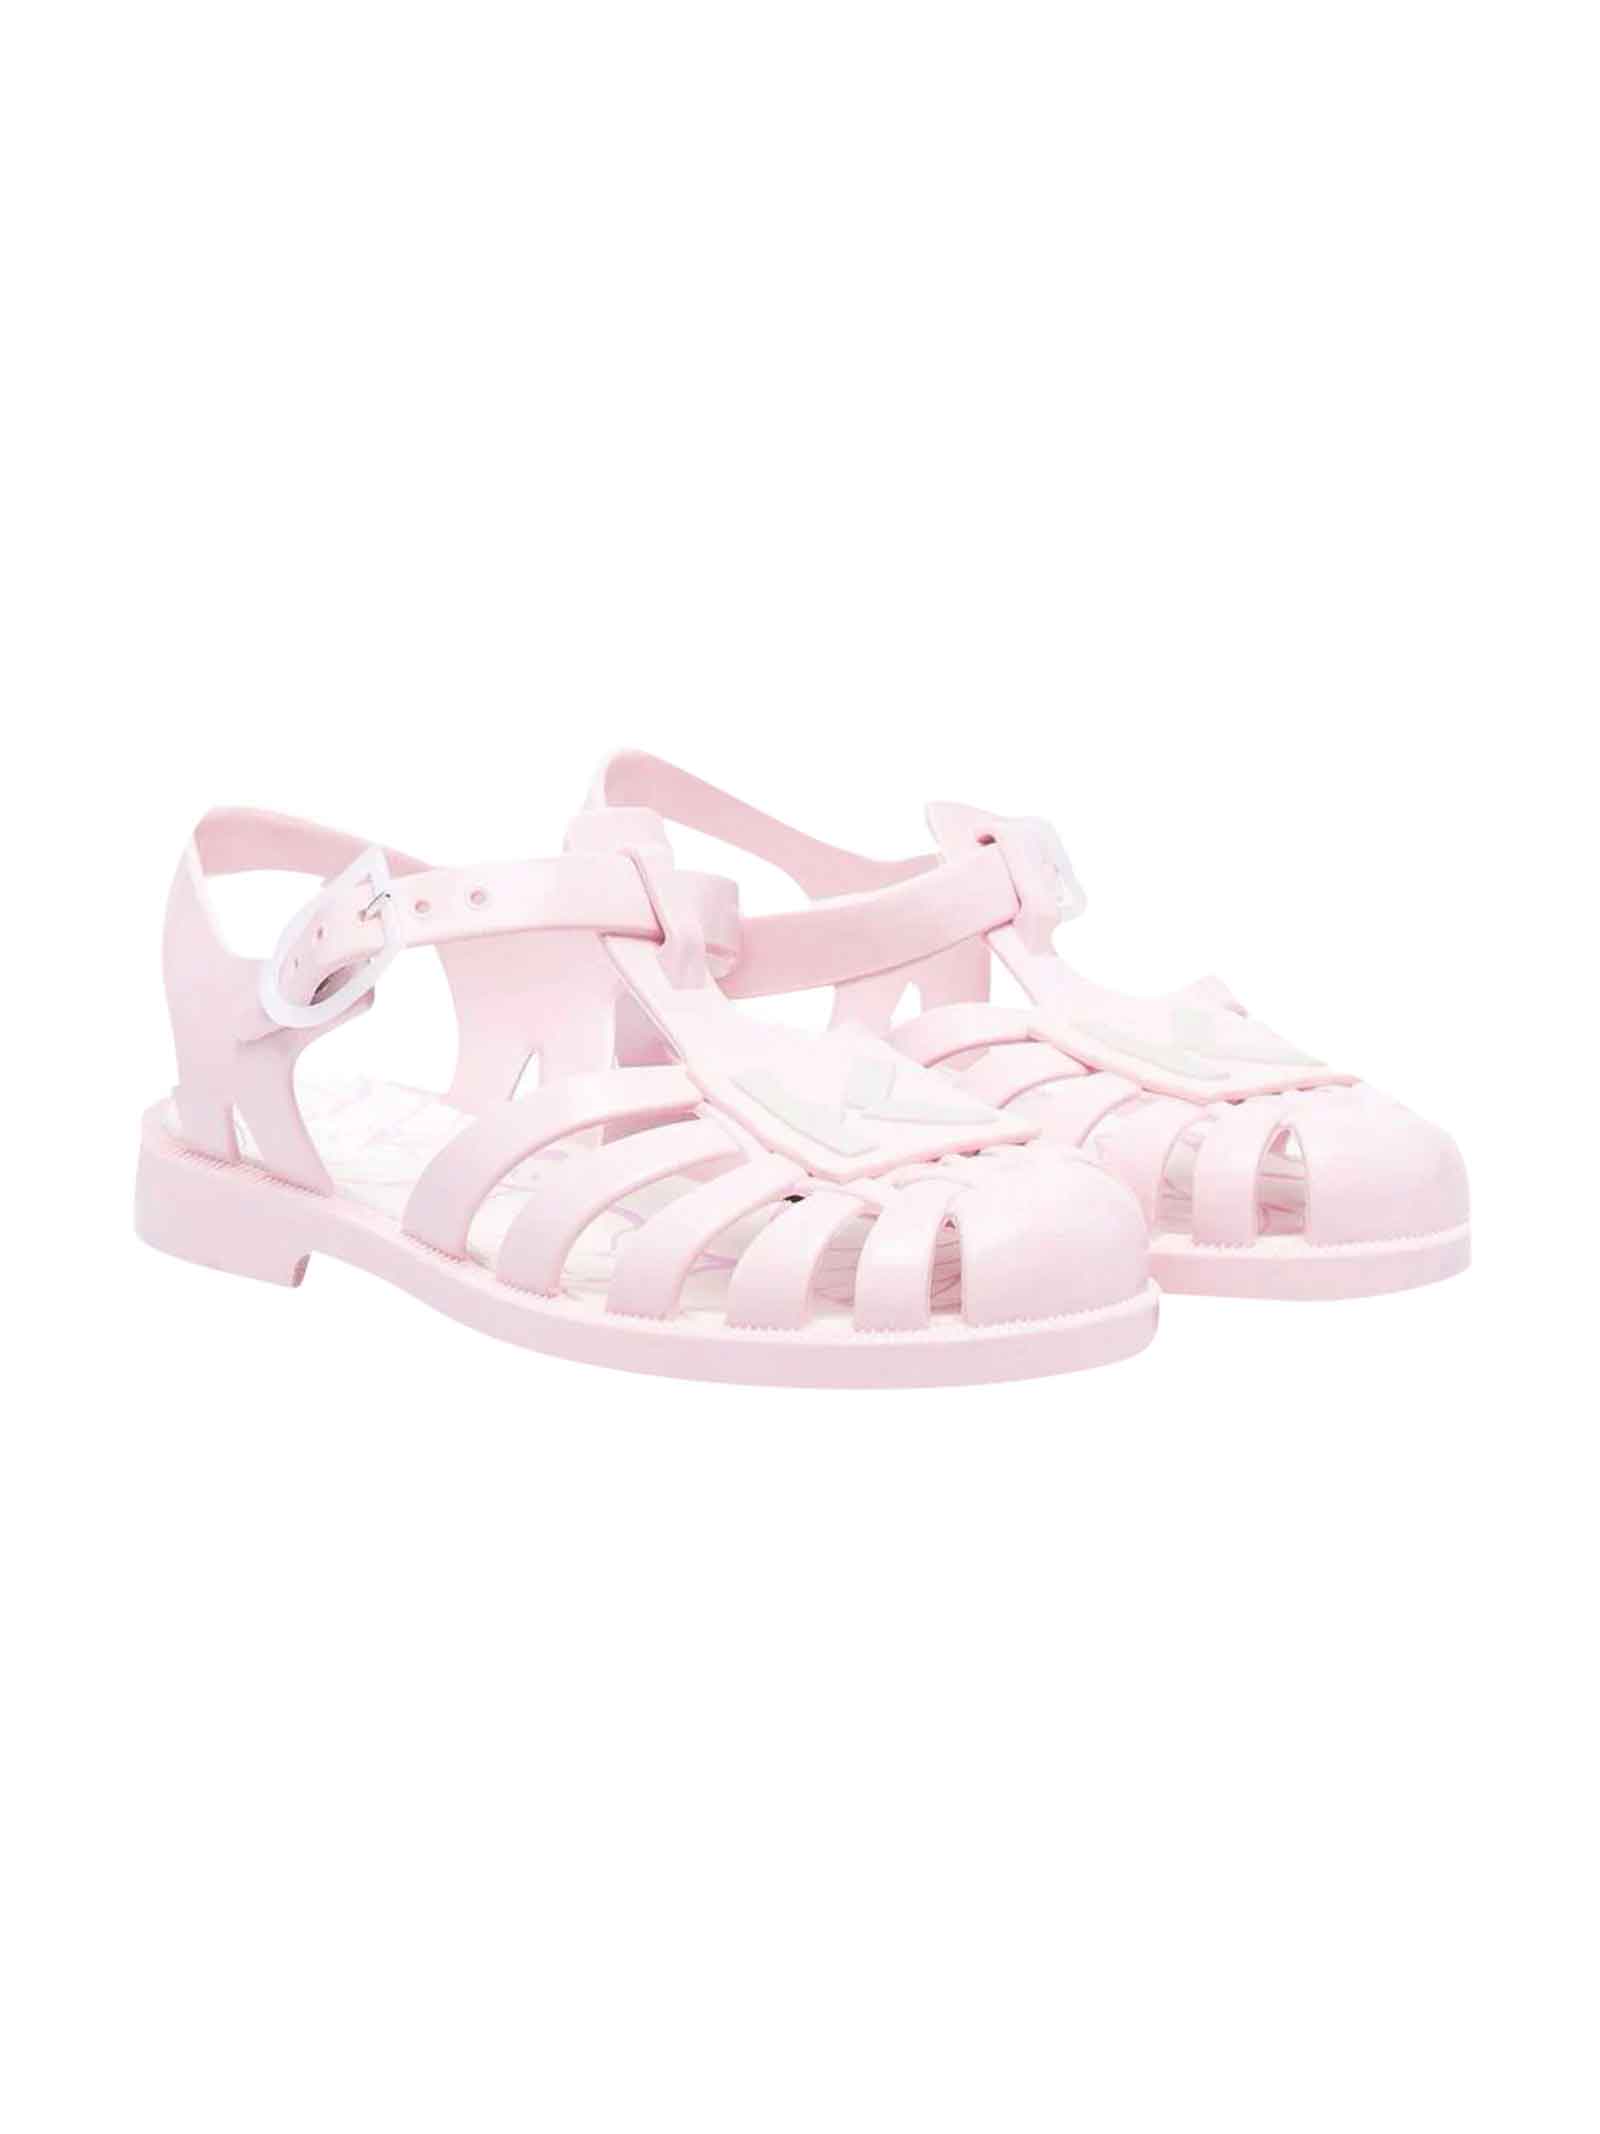 Kenzo Kids Pink Sandals Girl